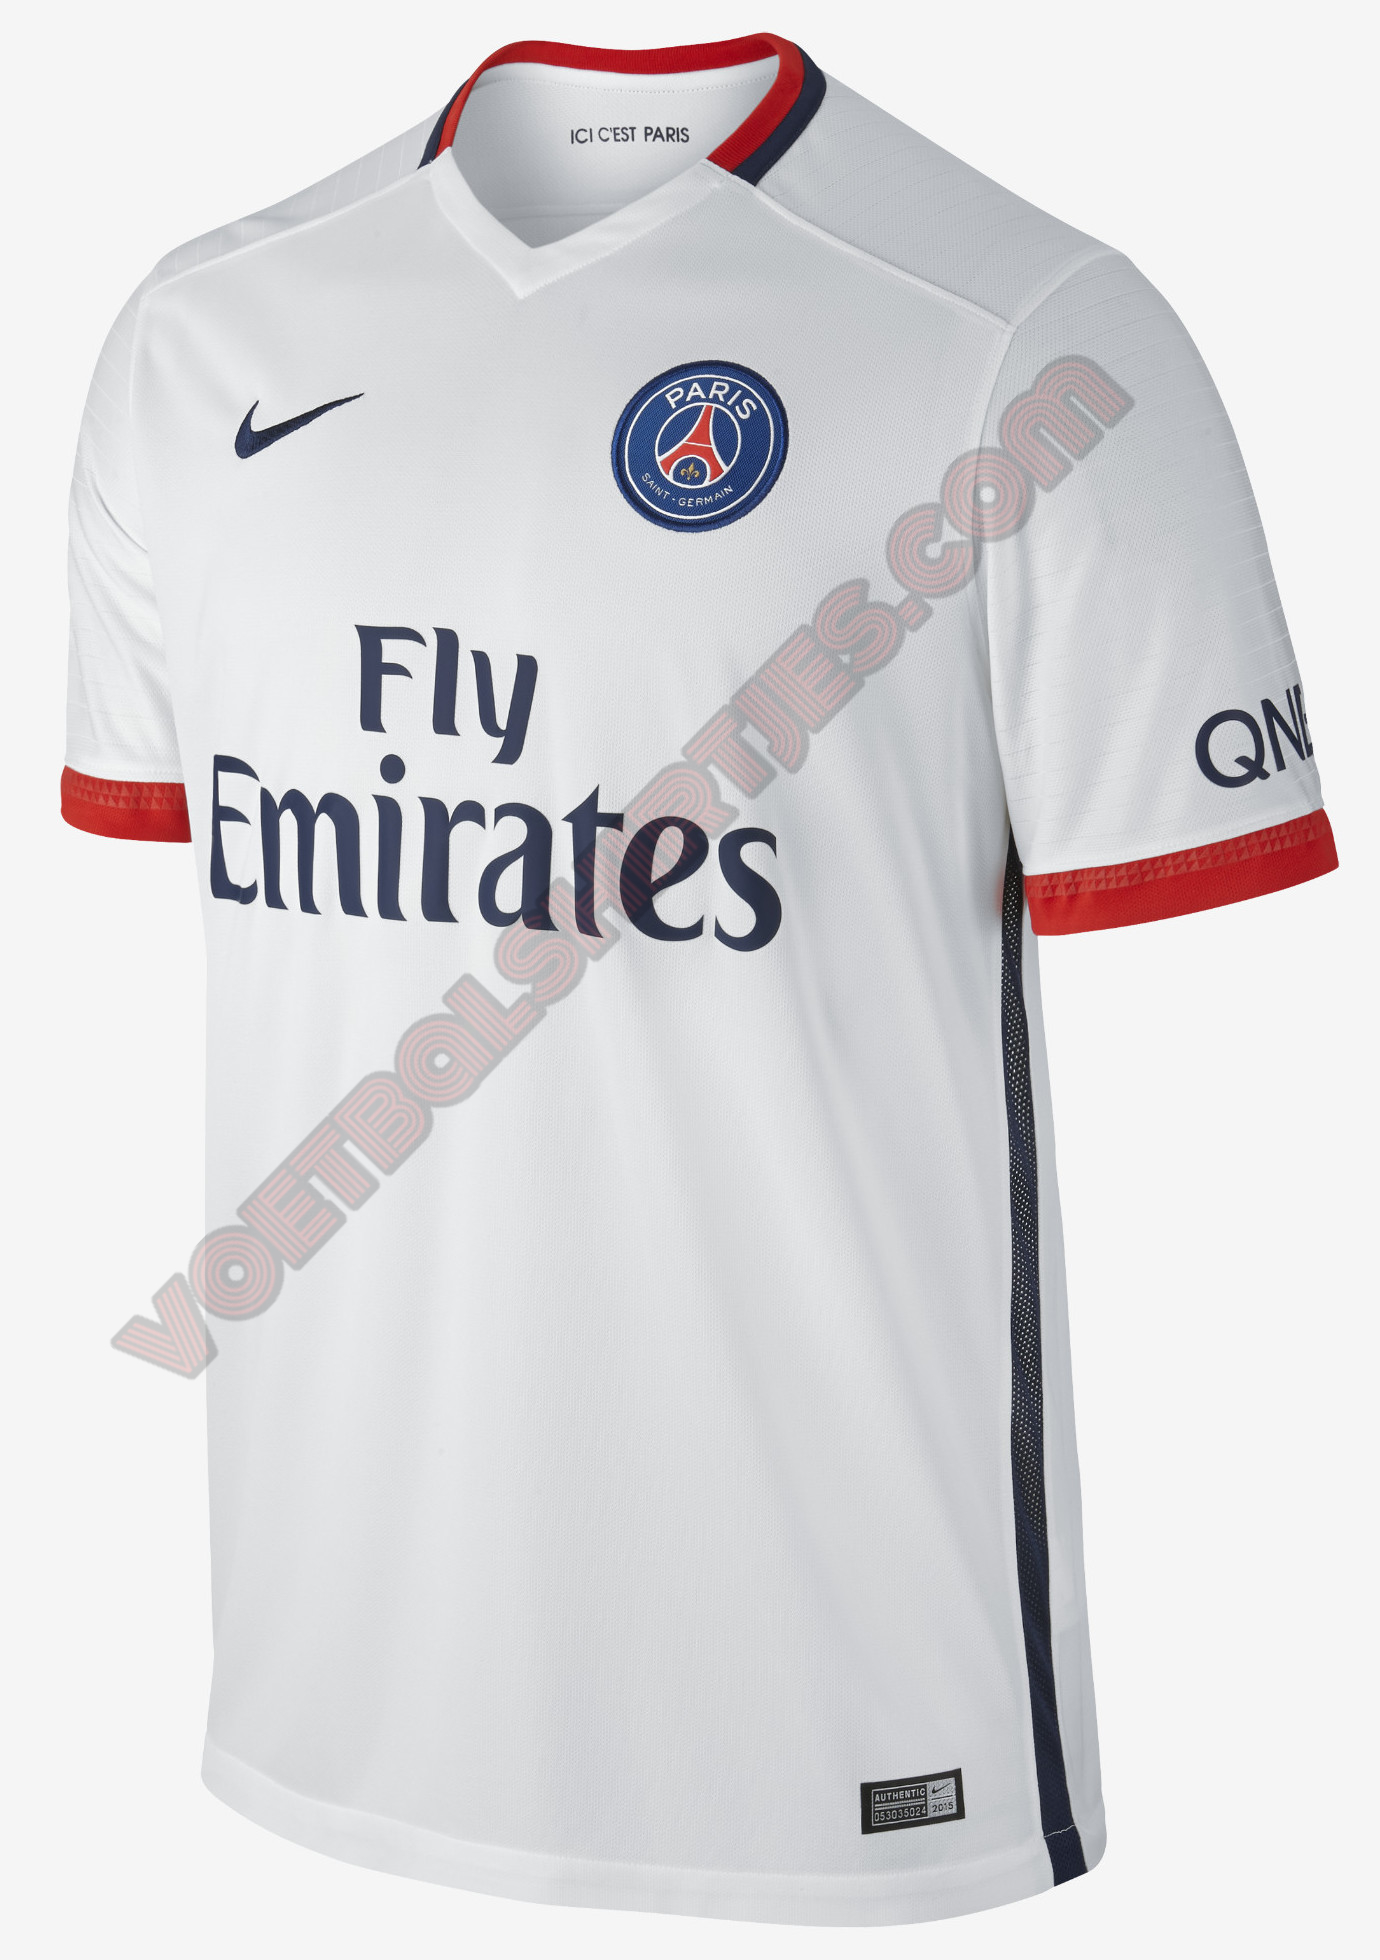 Premier Paradox Tutor PSG uitshirt 2016 - Paris Saint-Germain shirt 15/16